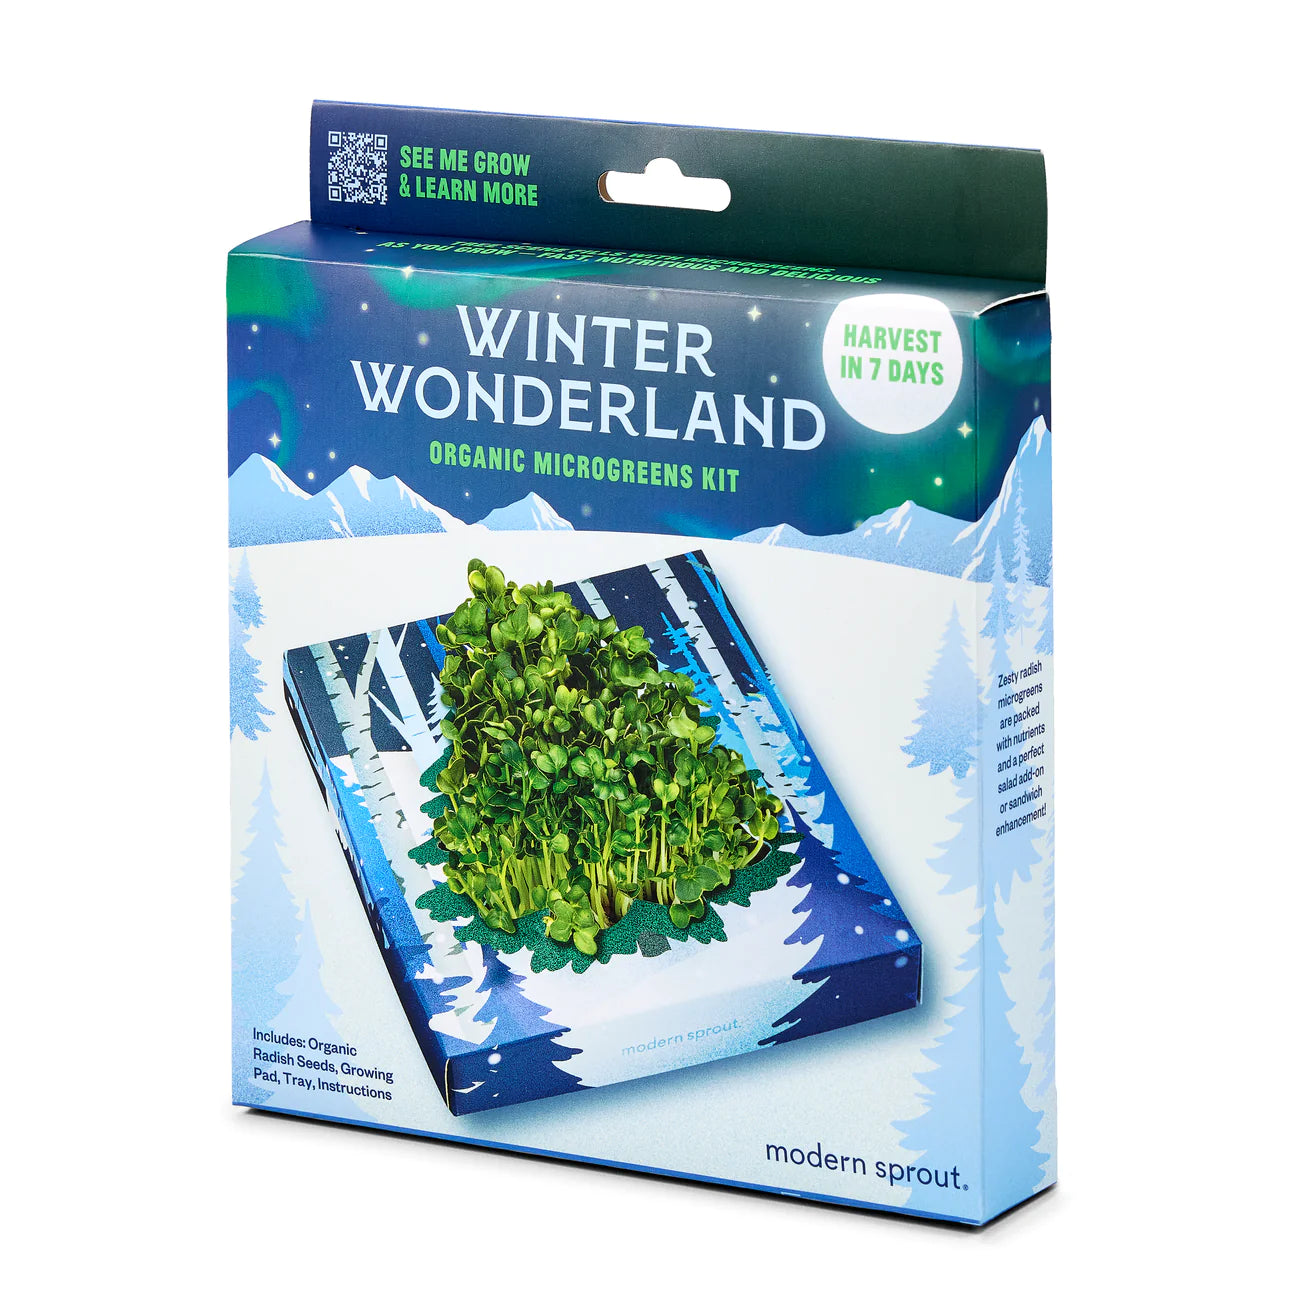 Winter Wonderland Organic Microgreens Kit